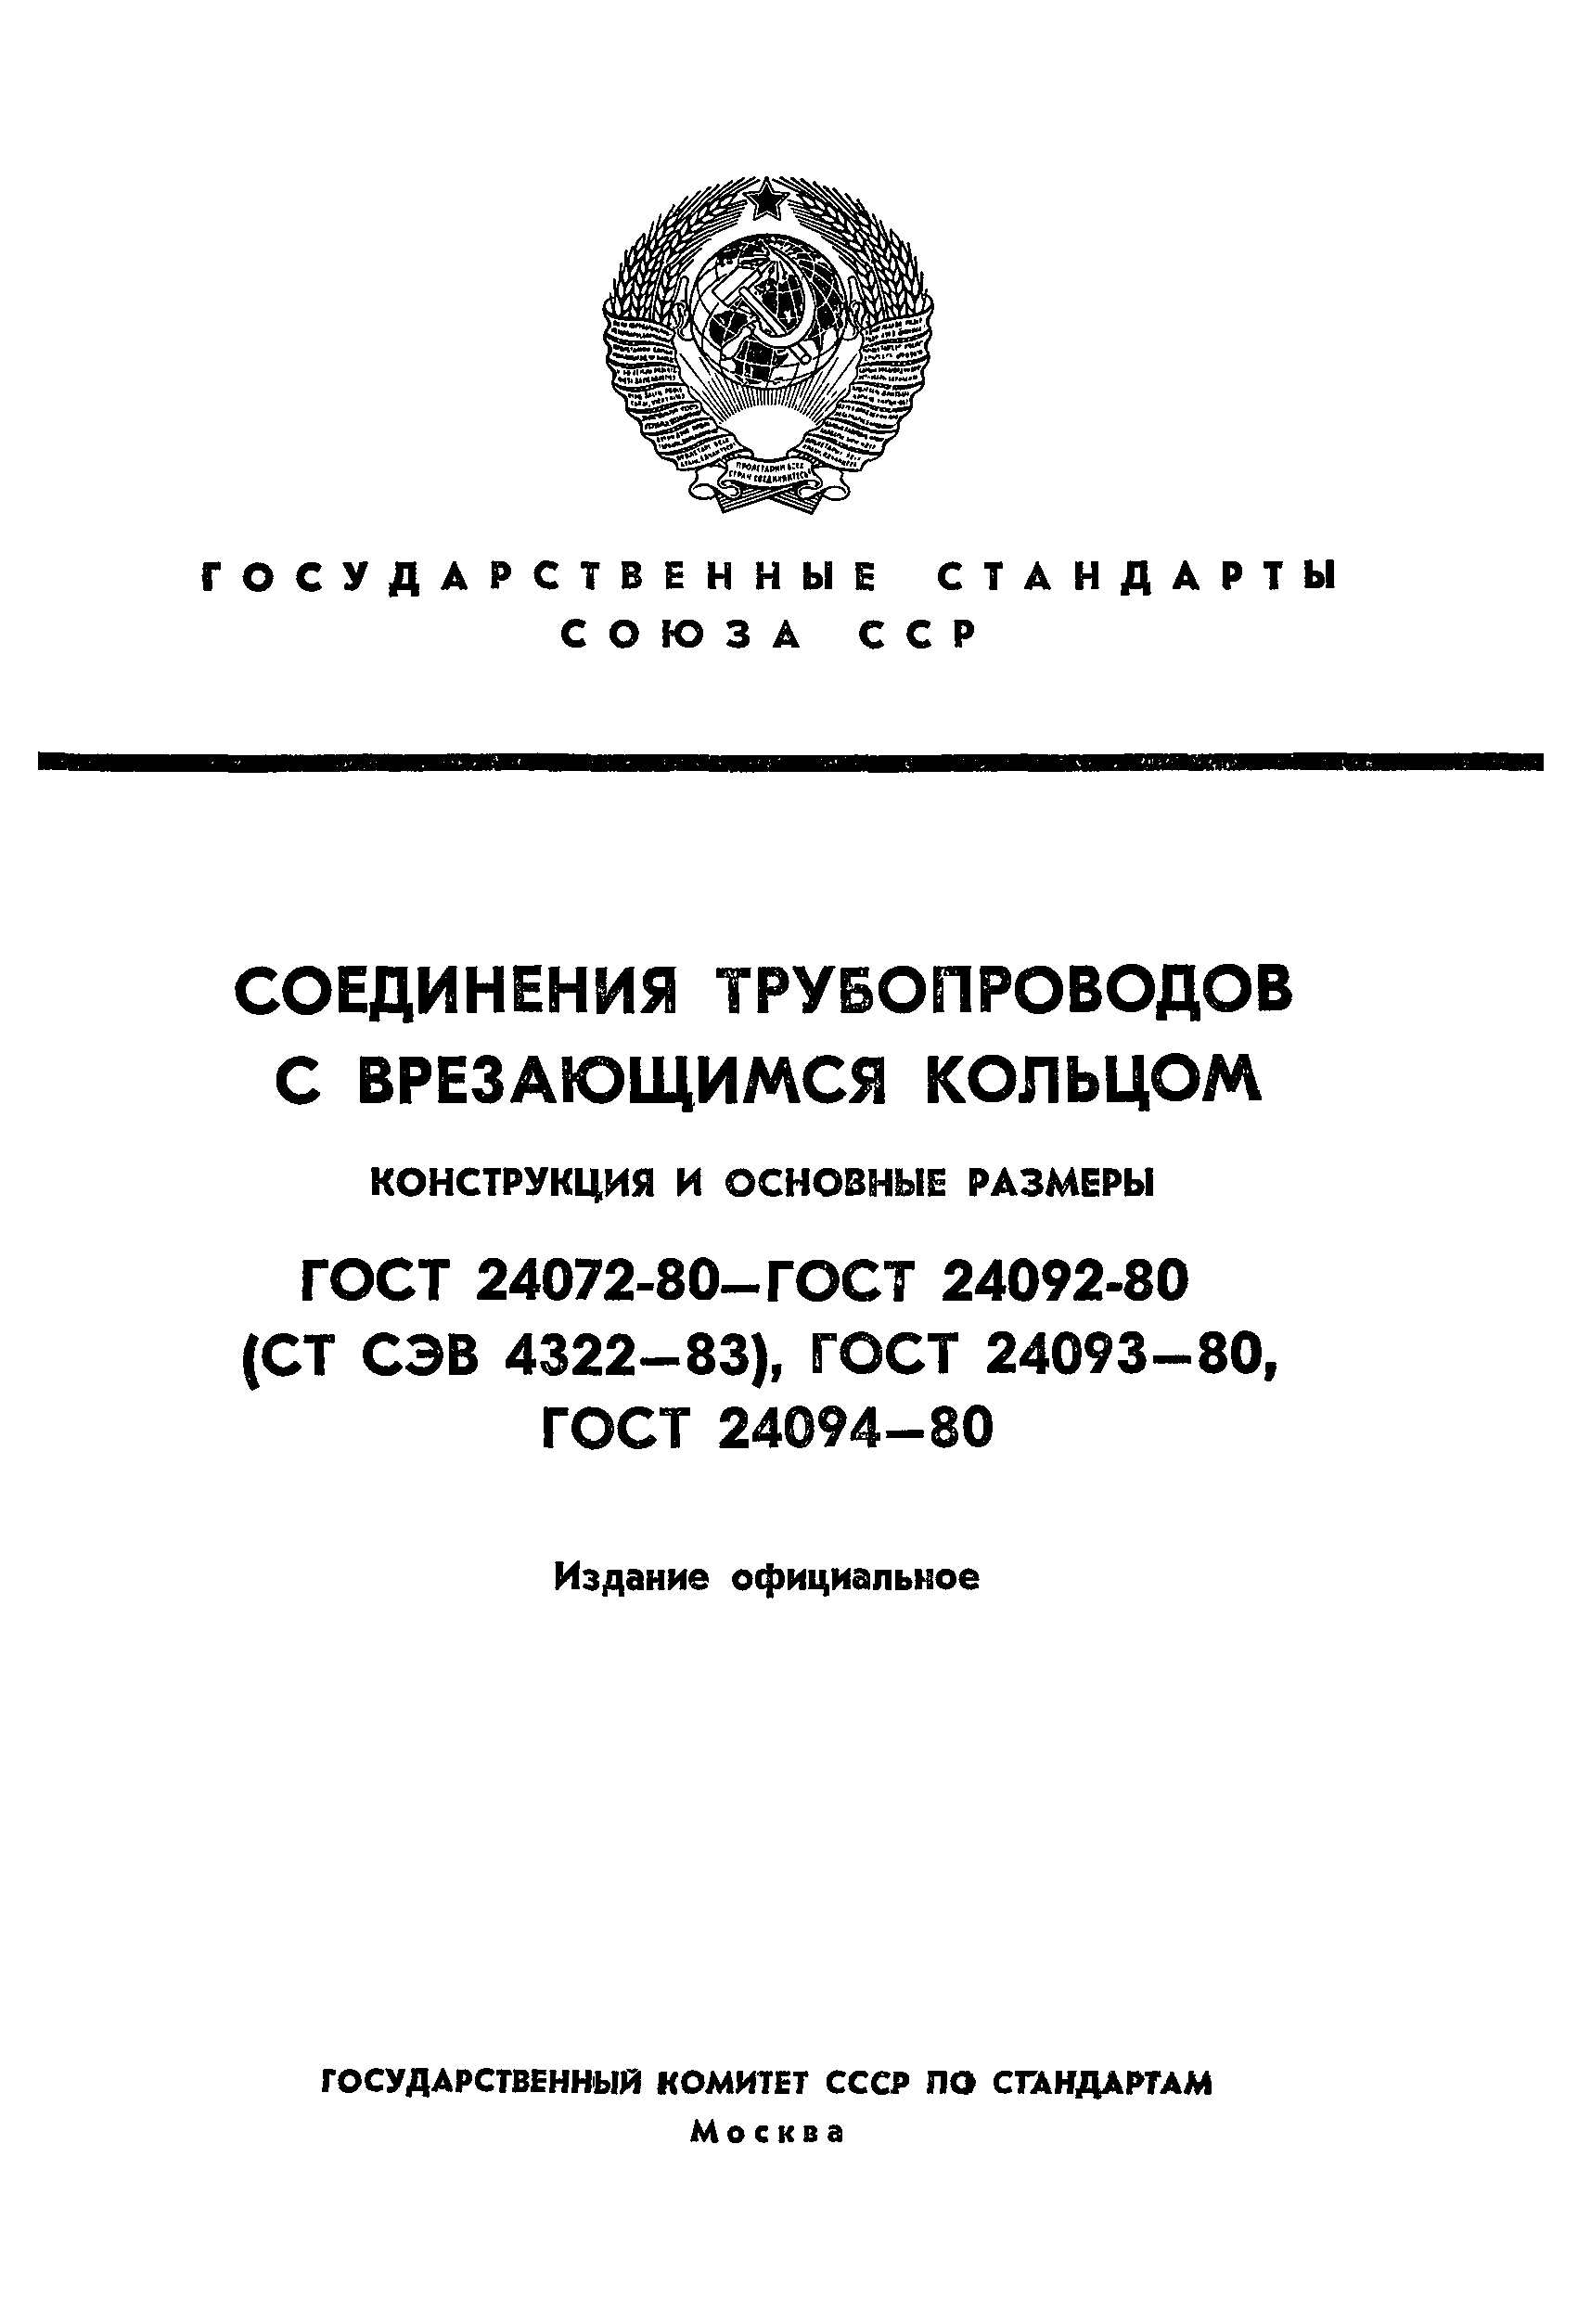 ГОСТ 24084-80